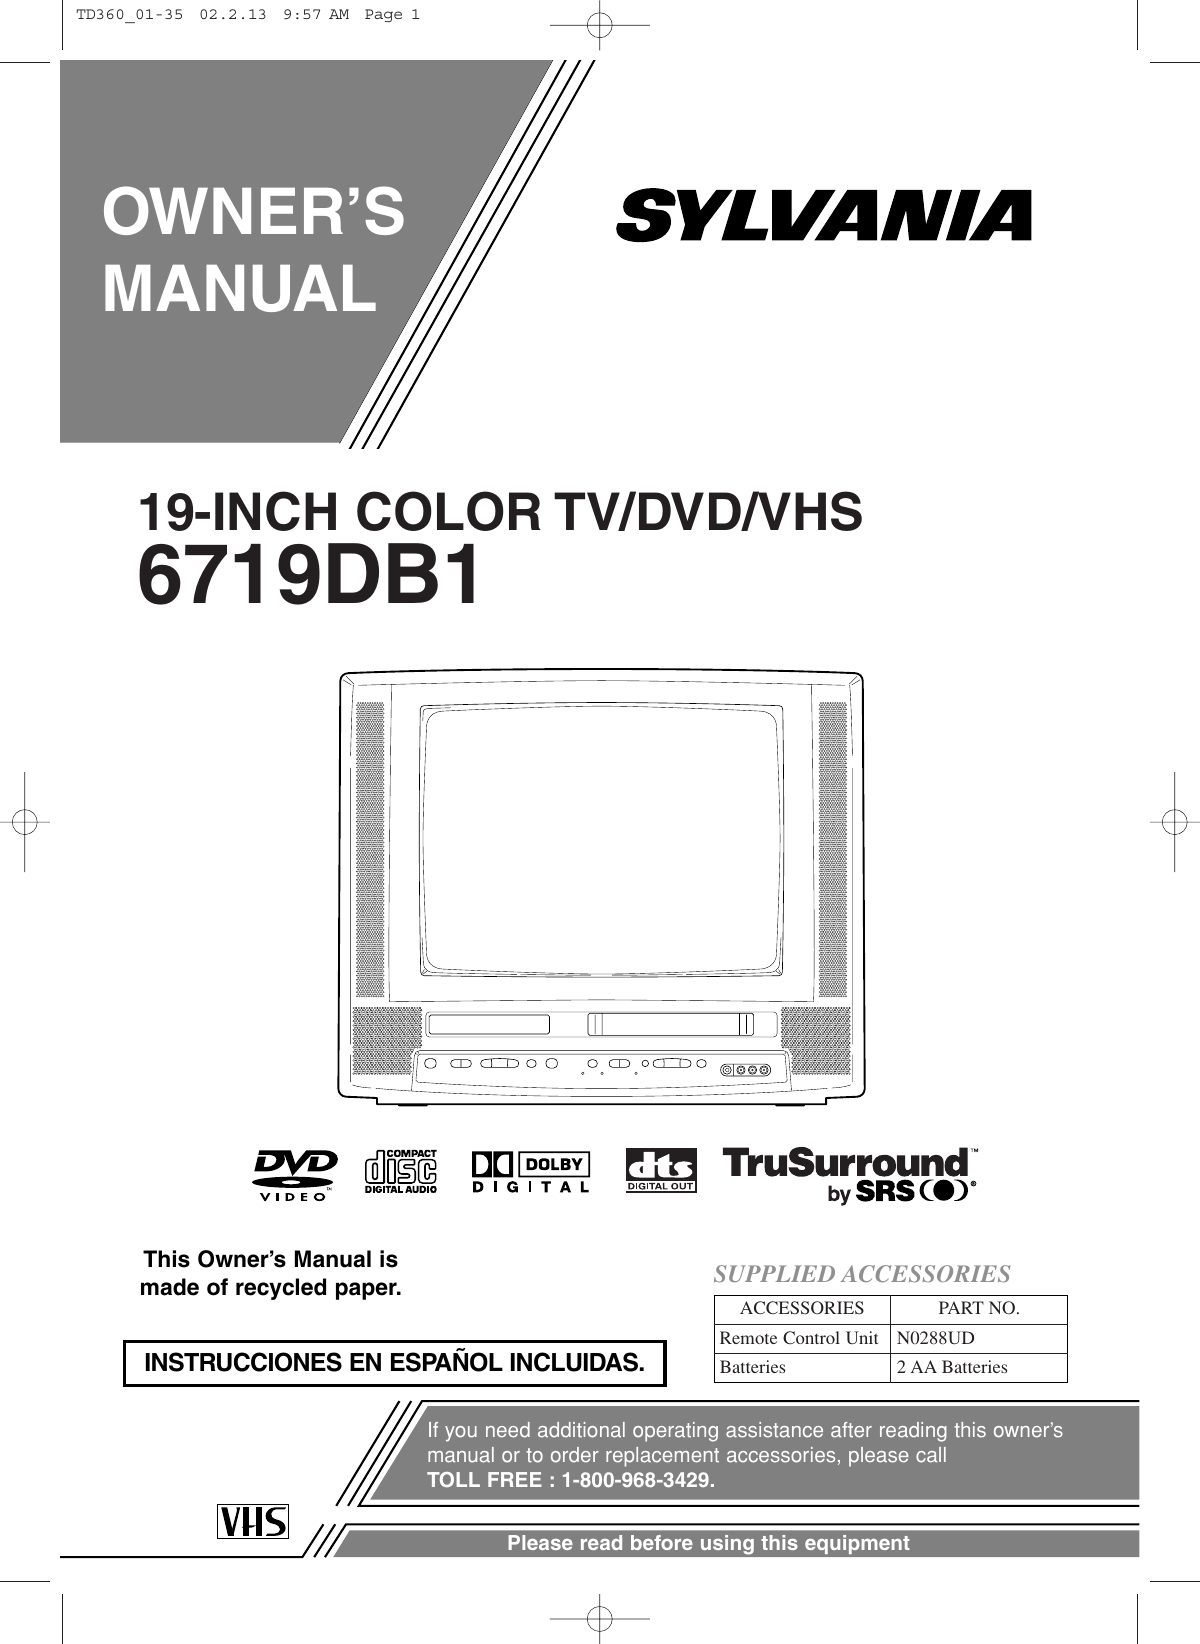 Sylvania 6719Db1 Users Manual TD360_01 35